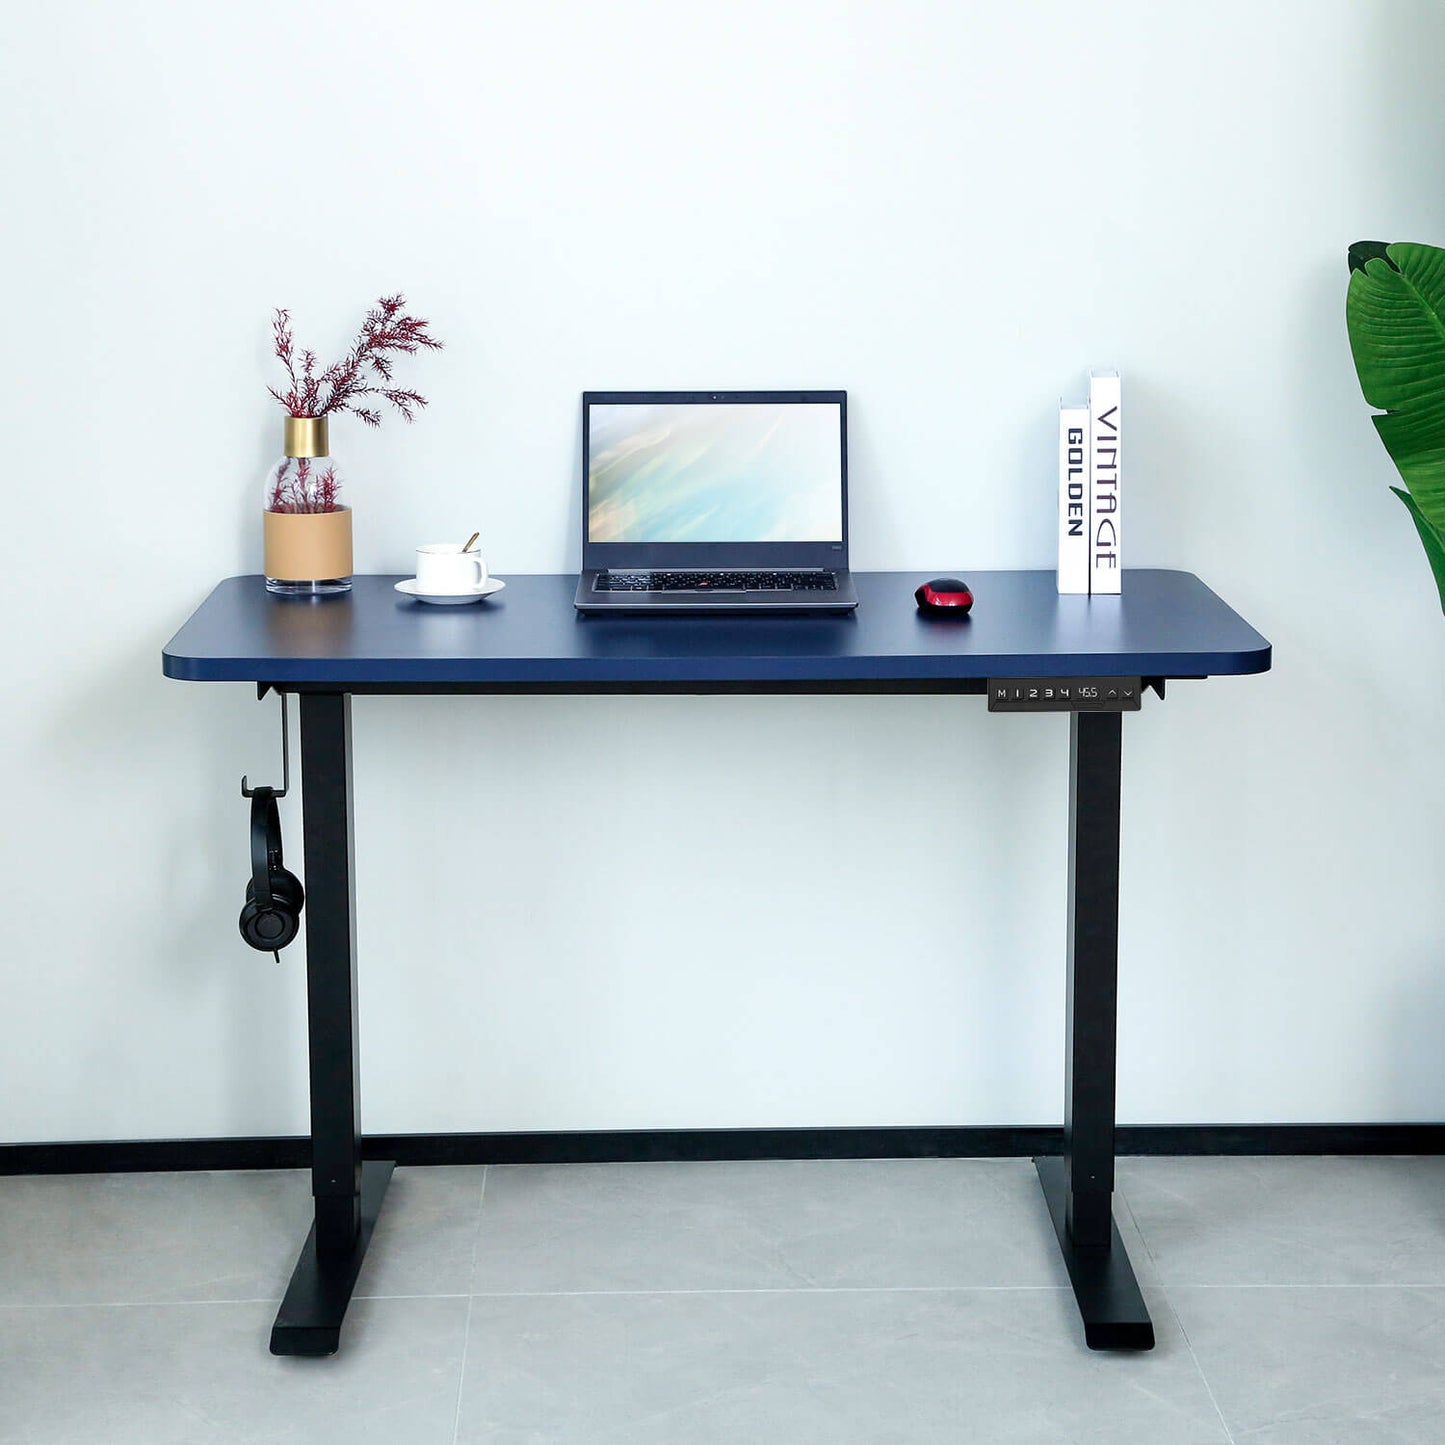 Blue Top standing desk with black frame